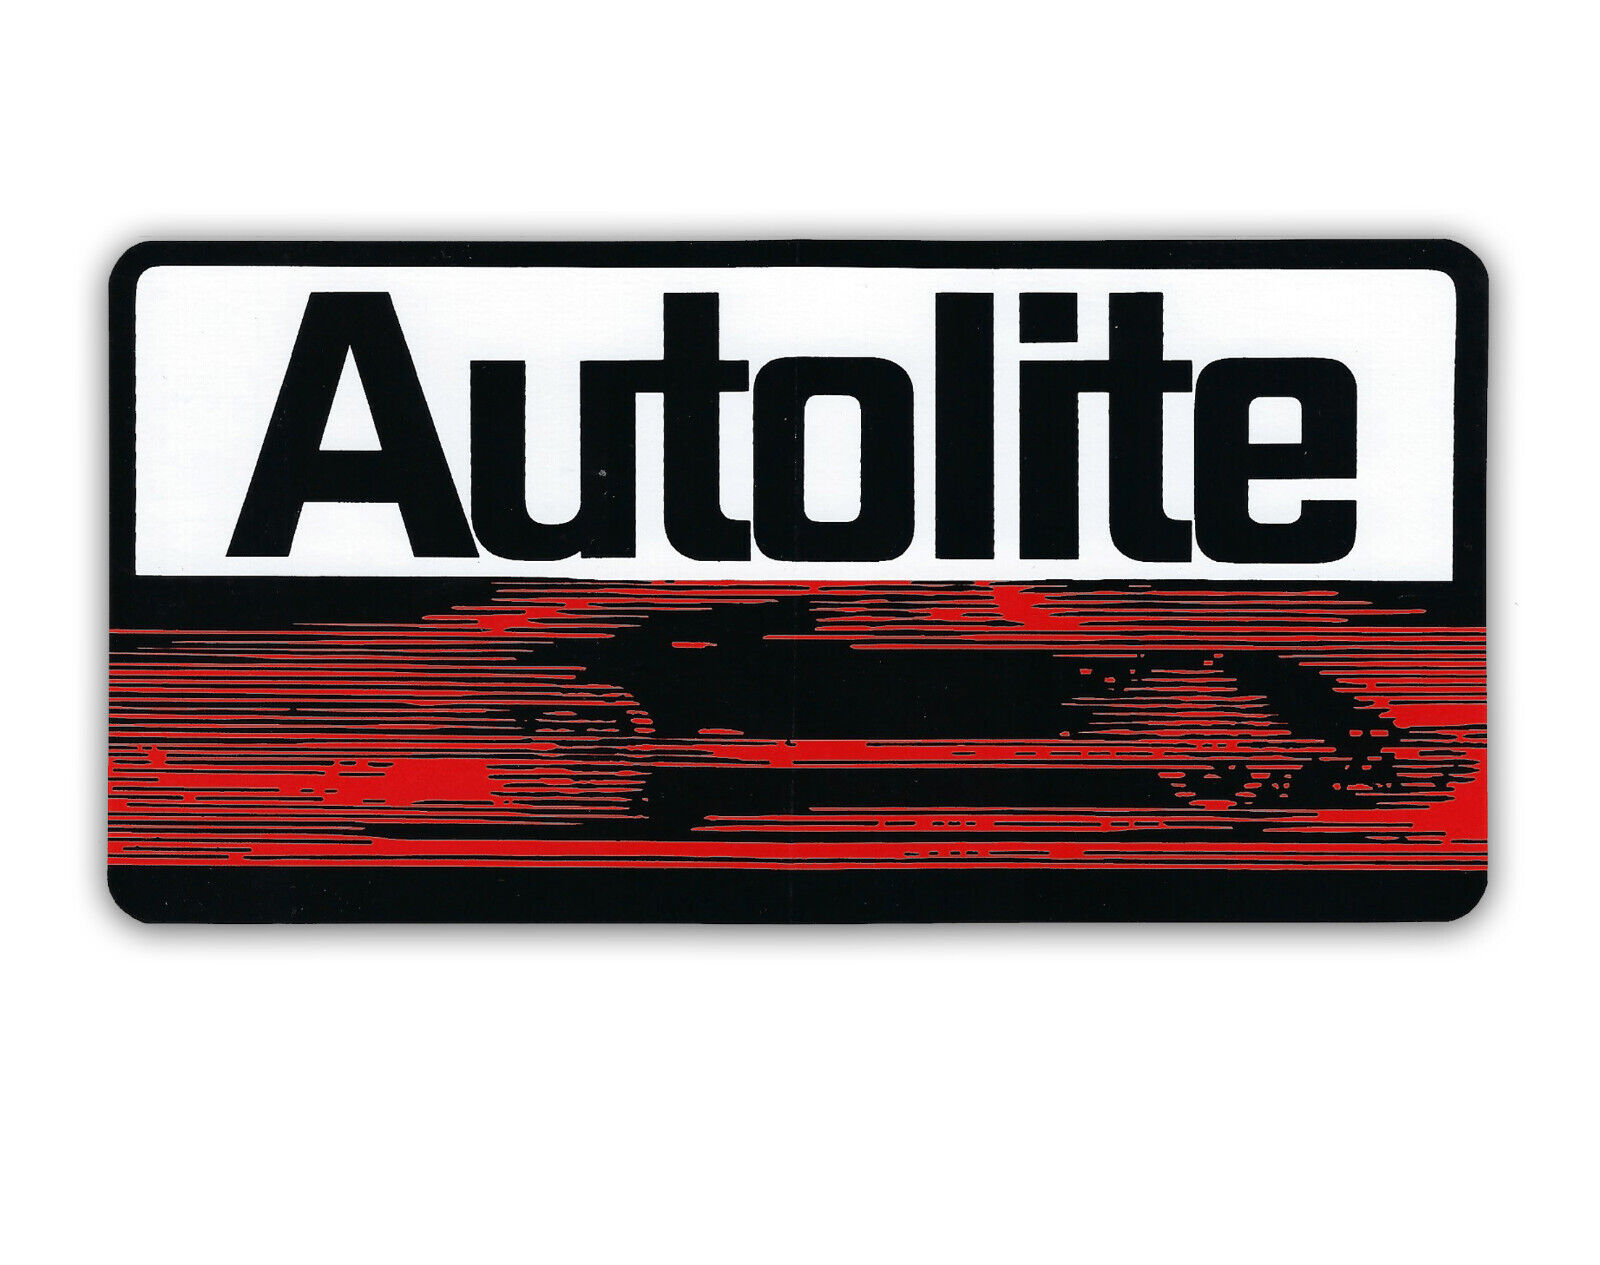 Autolite Ford Motorcraft Ford GT Ford GT40 vintage  Garage decal sticker